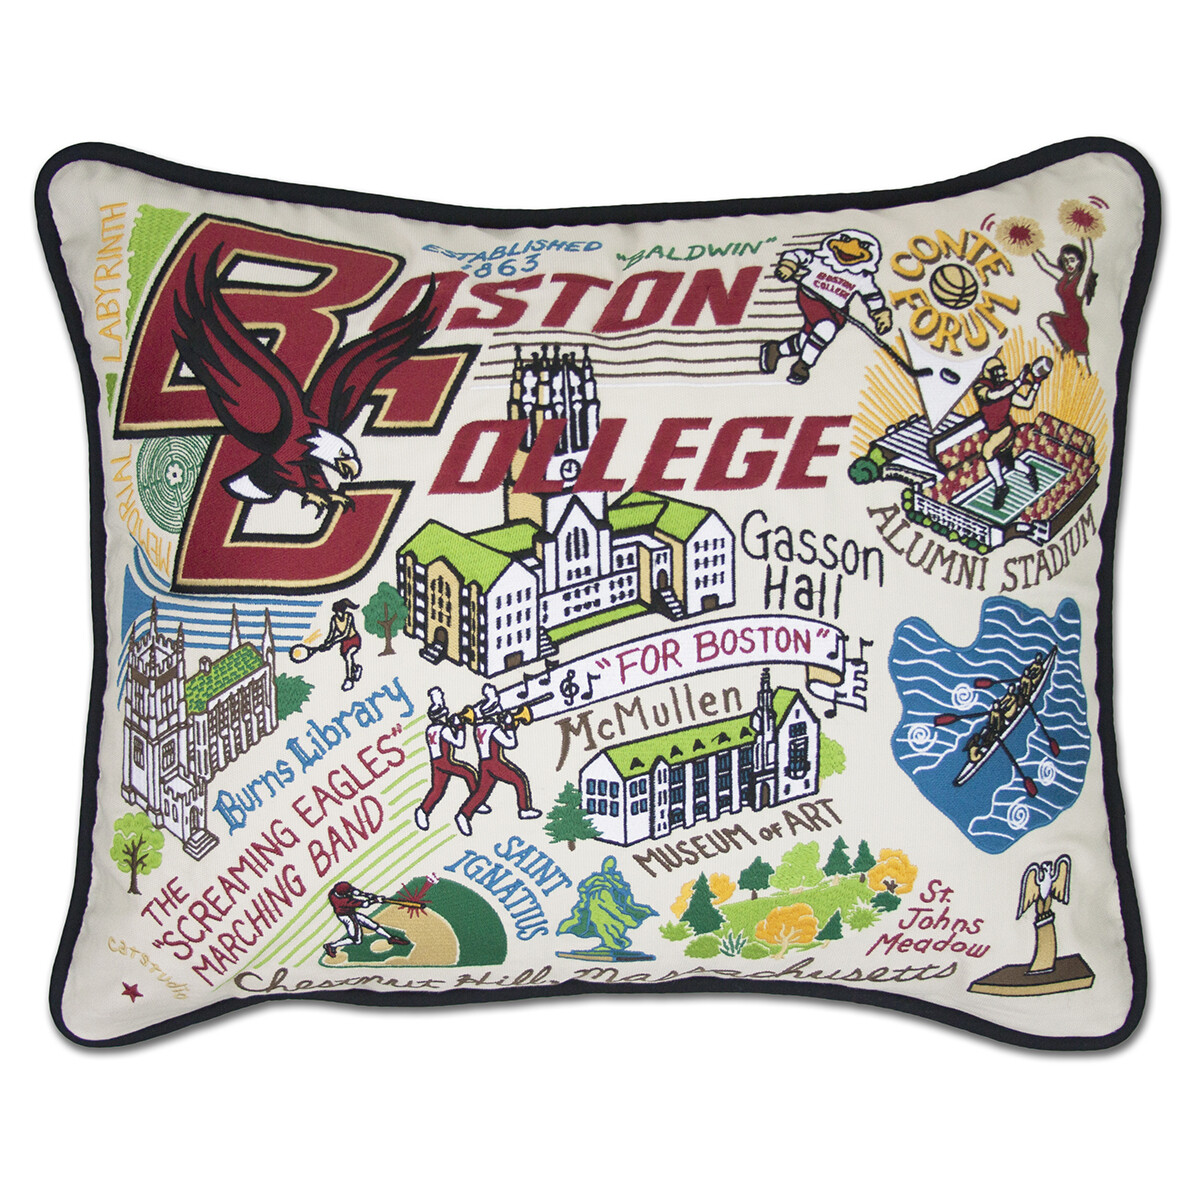 Boston College pillow